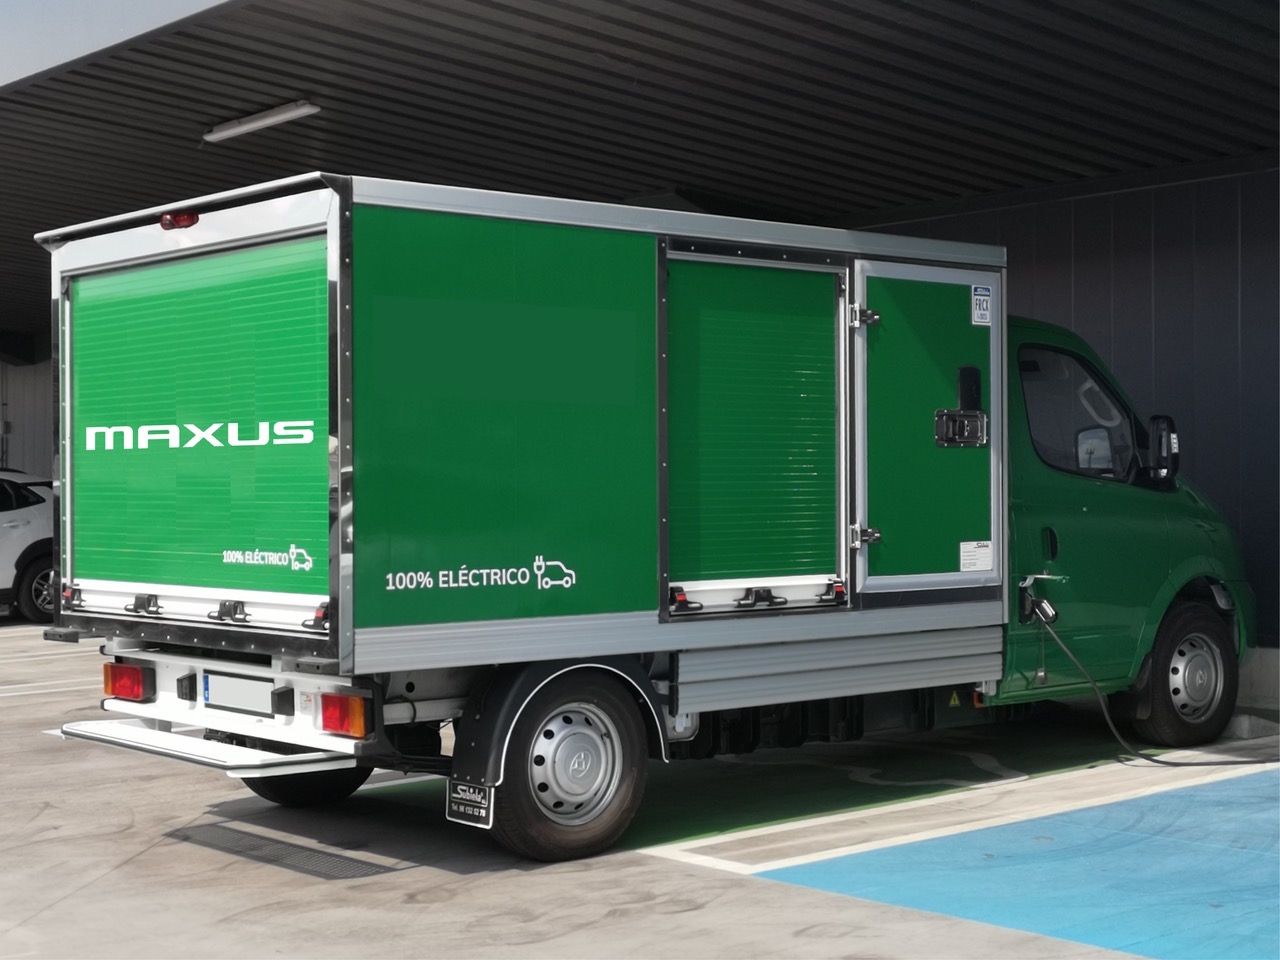 maxus-ev80-electrica-isoterma-frigorifica-unica-en-3500-kg